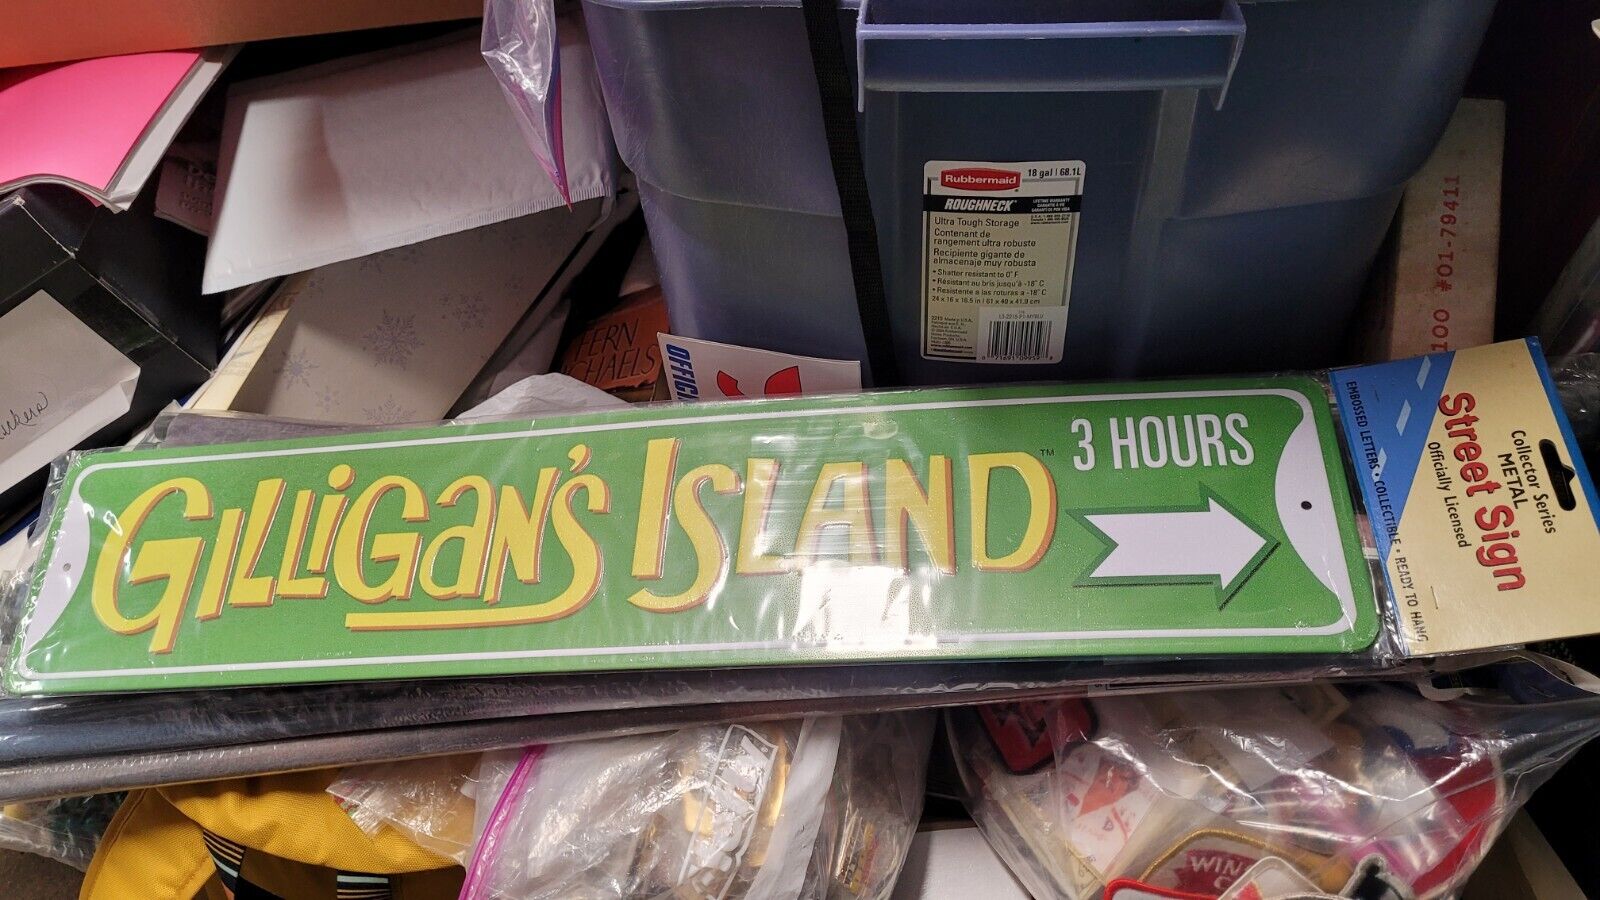 Gilligans Island 3 Hours    Metal Street Sign New